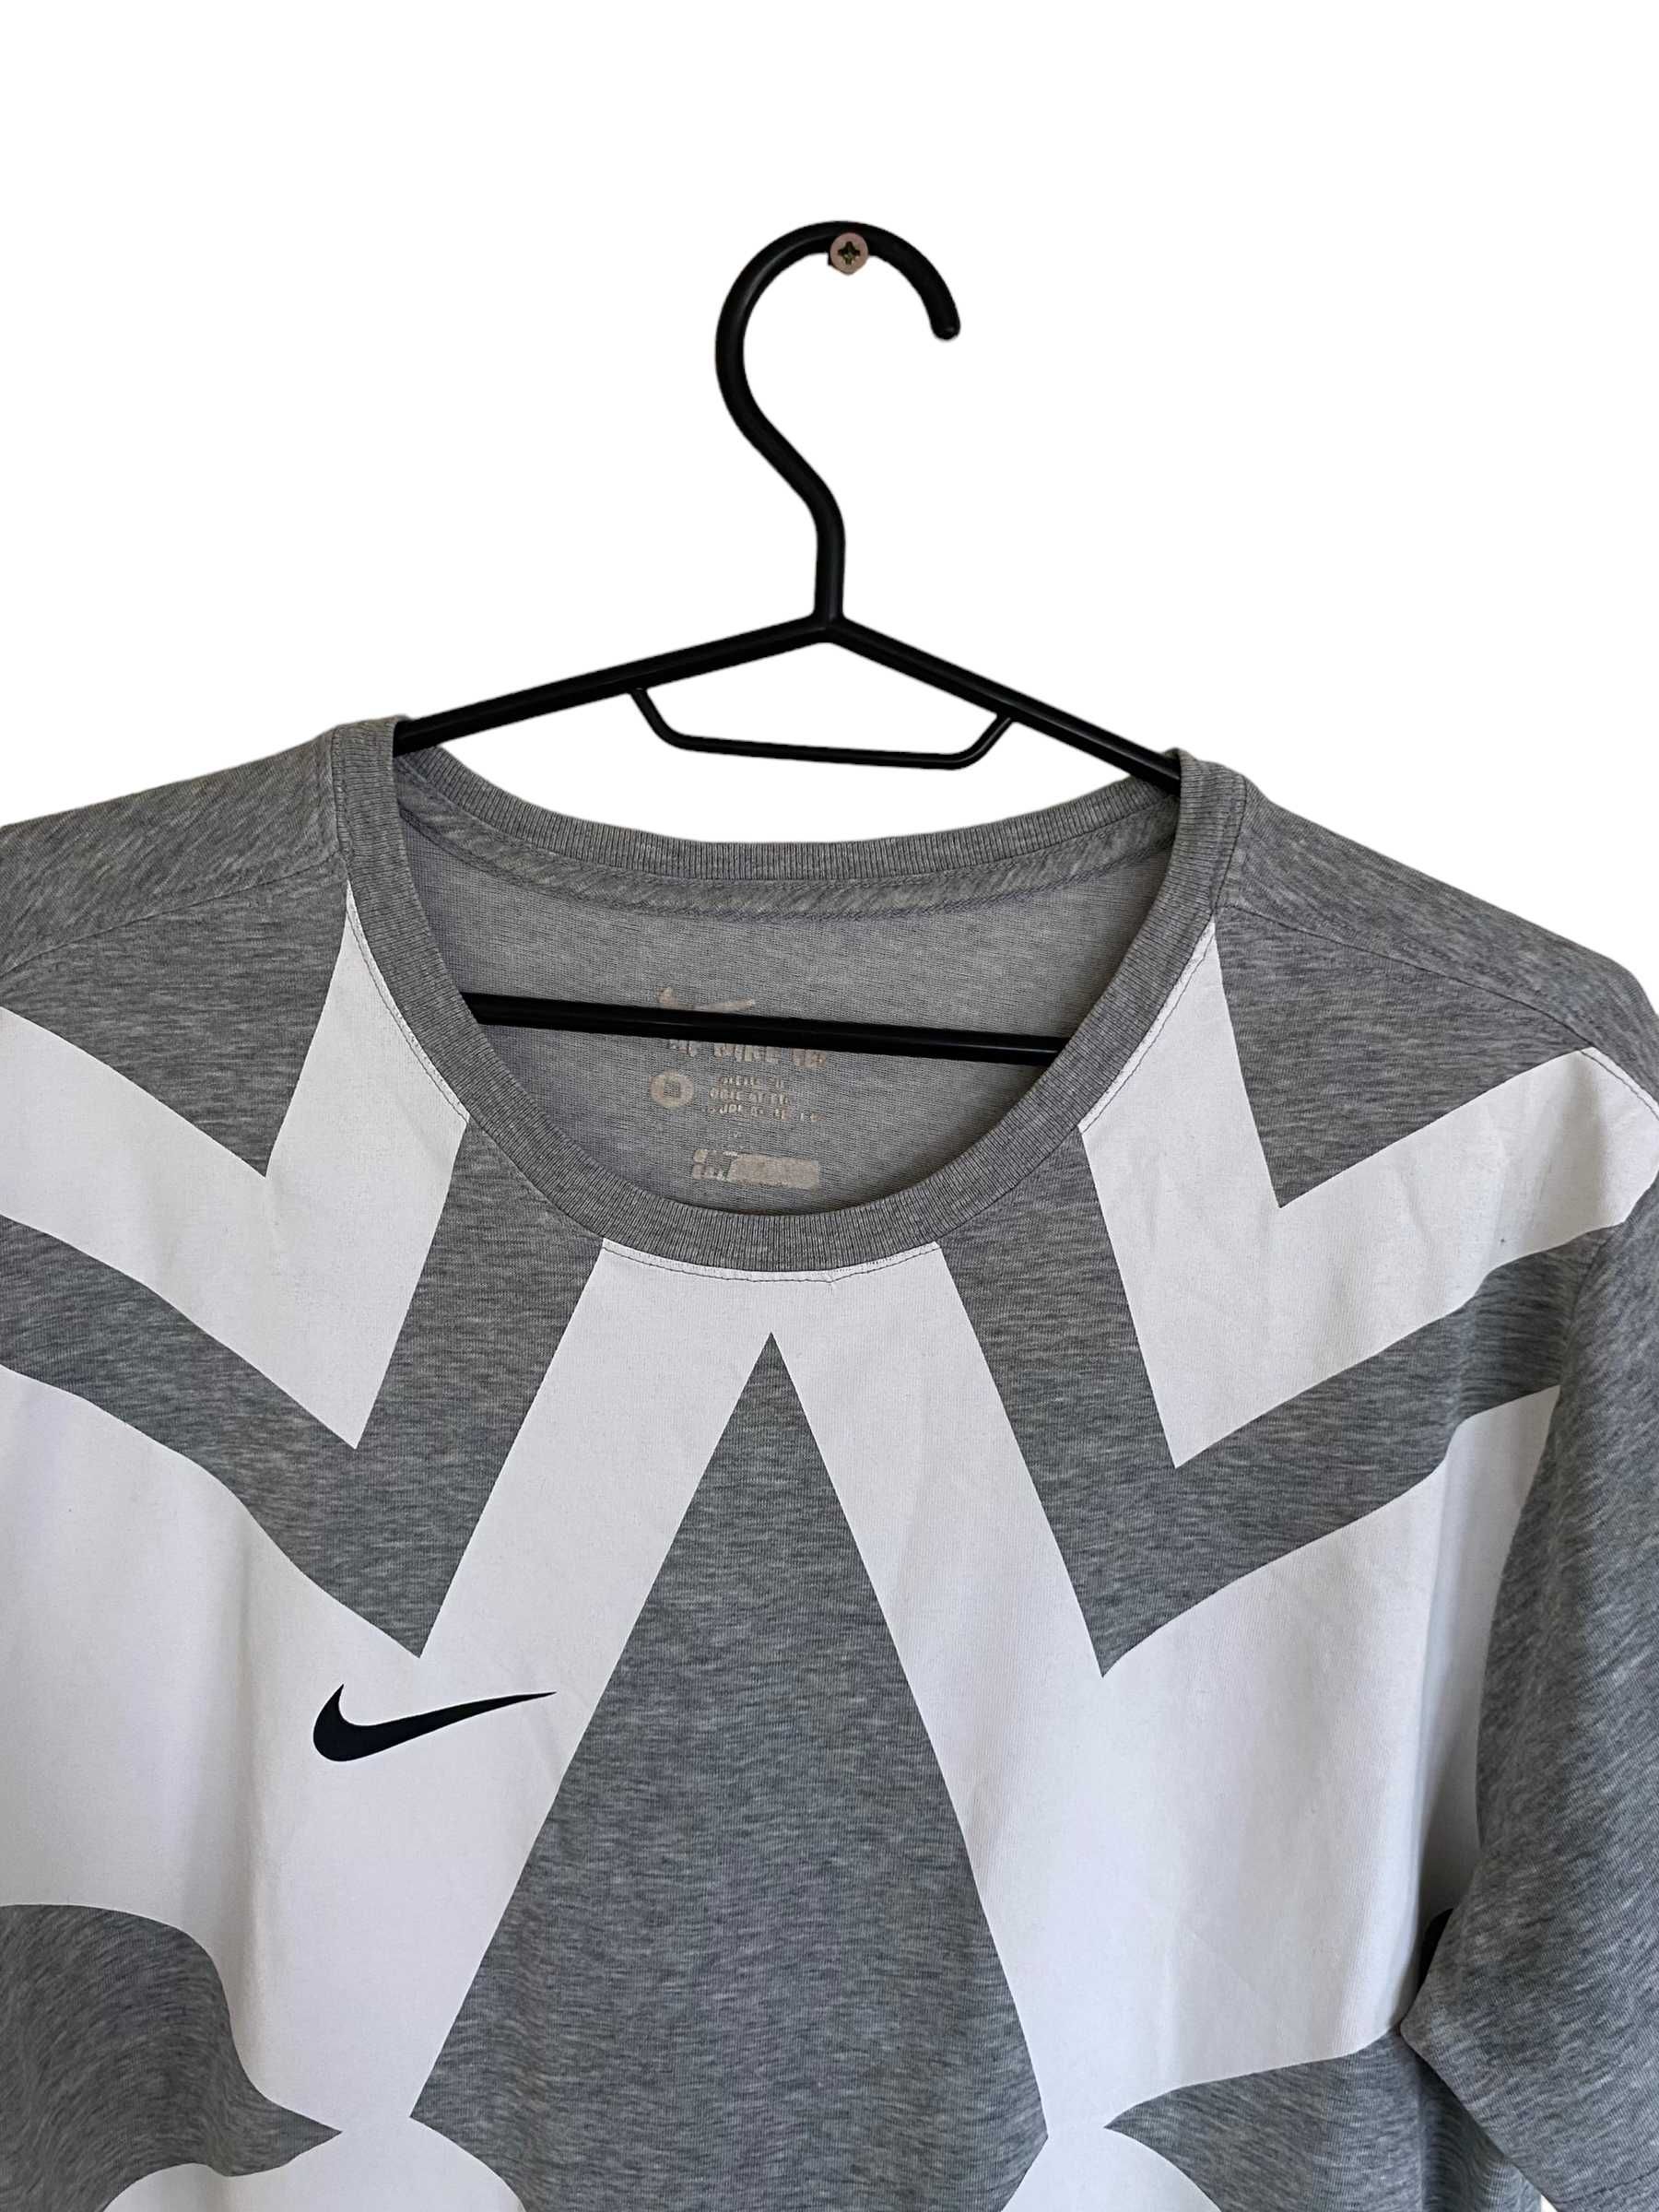 Nike fullprint t-shirt, rozmiar M, stan bardzo dobry